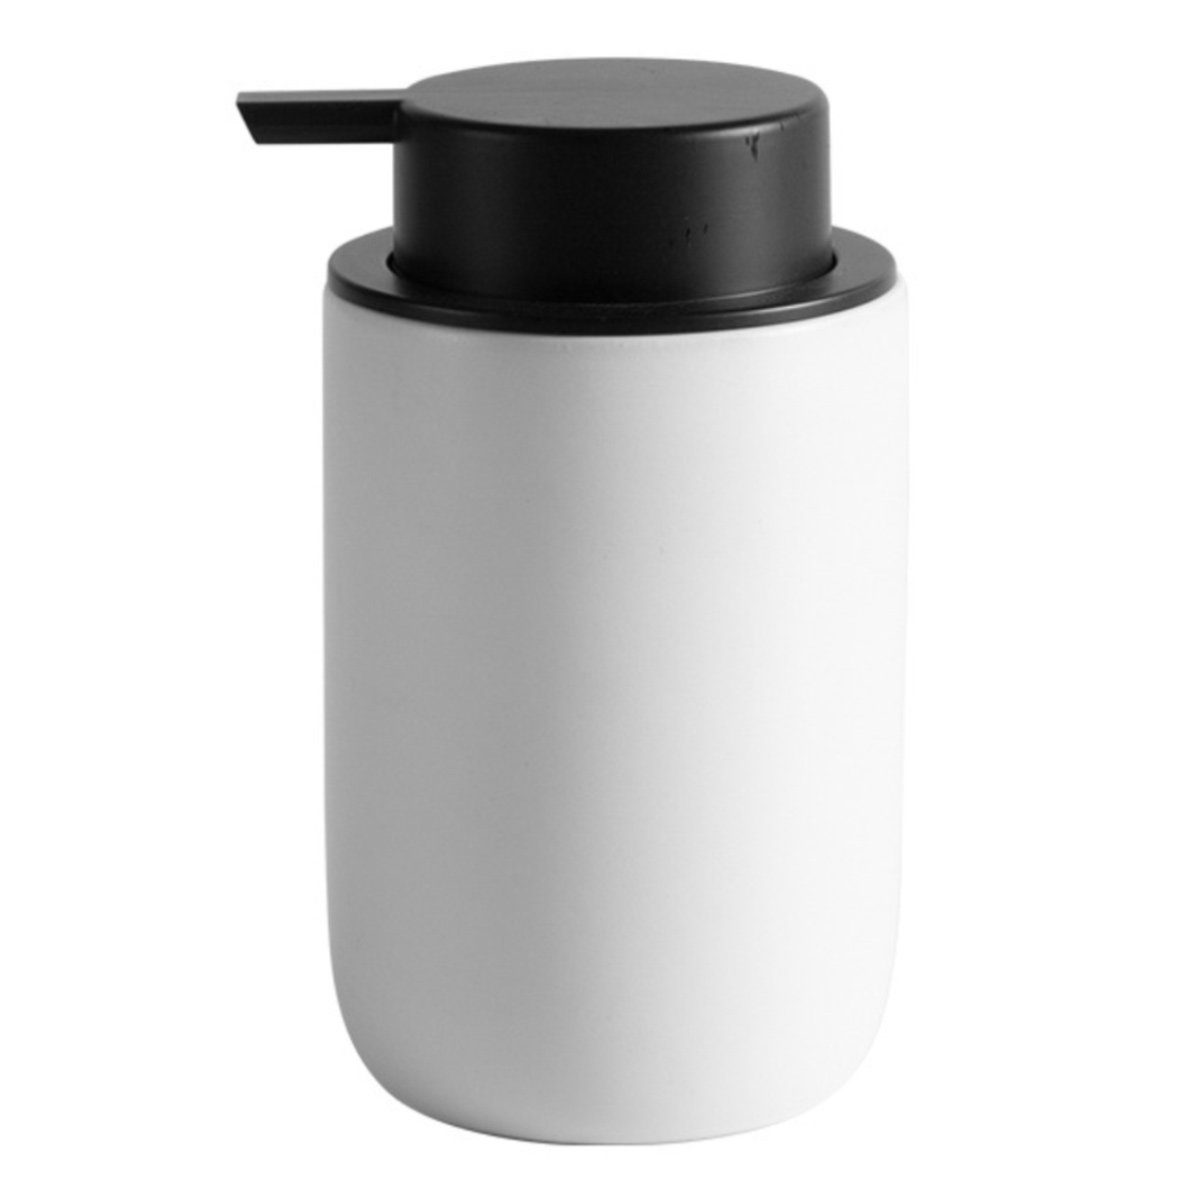 Handseife,Shampoo,Duschgel Seifenspender Dispenser Weiß Jormftte Keramik,für Seifenspender,Soap